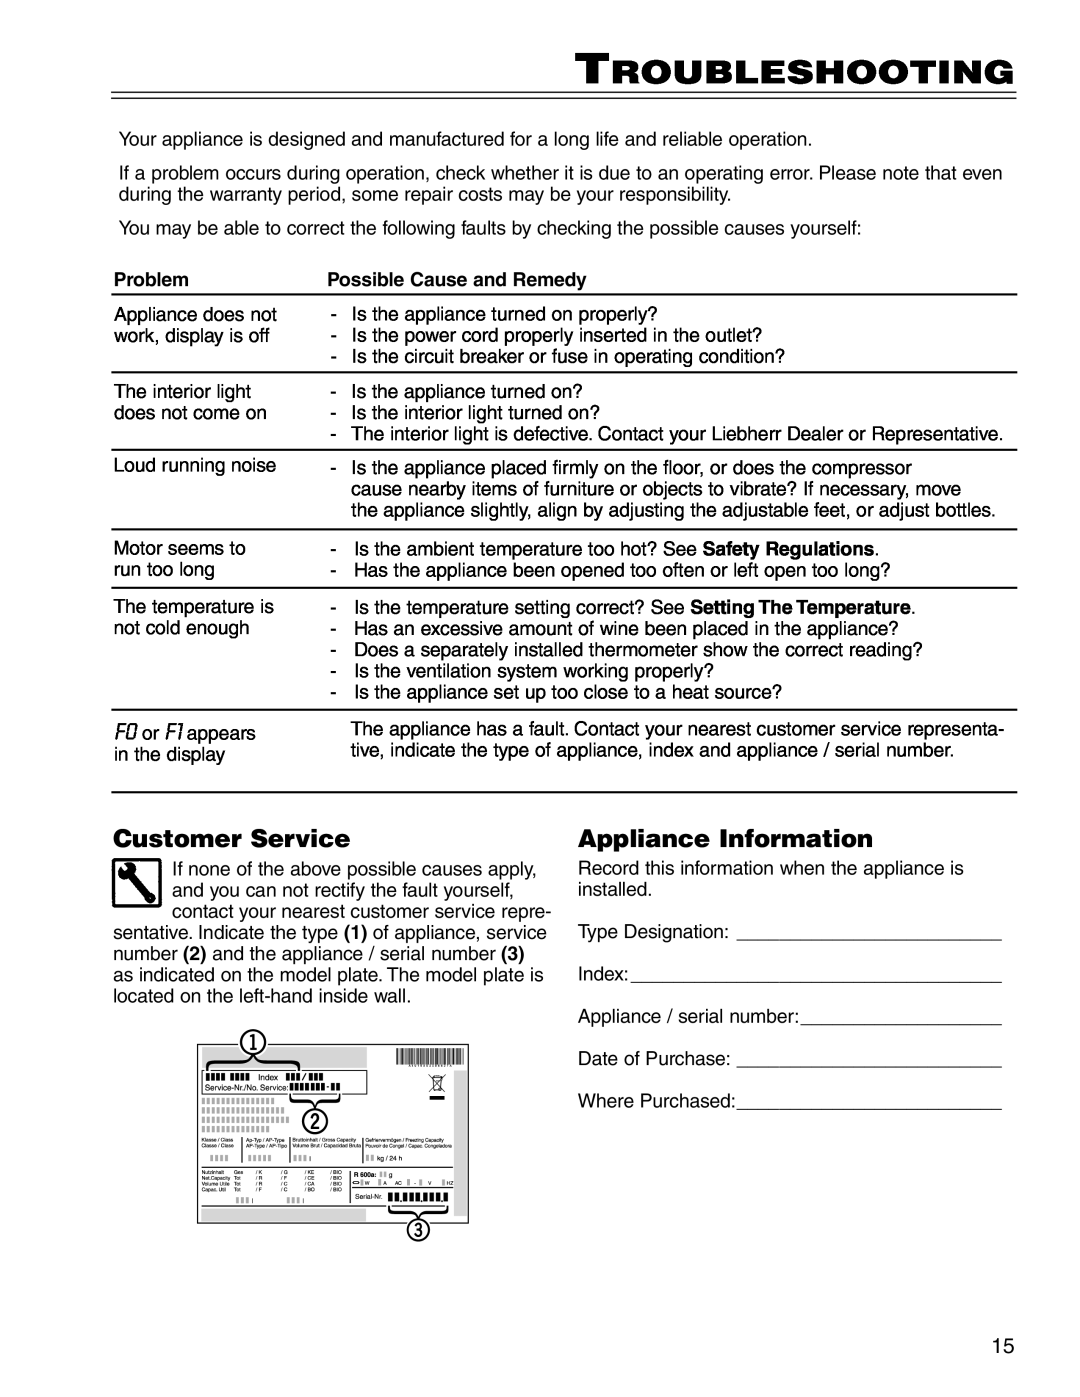 Liebherr WU 40 manual Troubleshooting, Customer Service, Appliance Information 